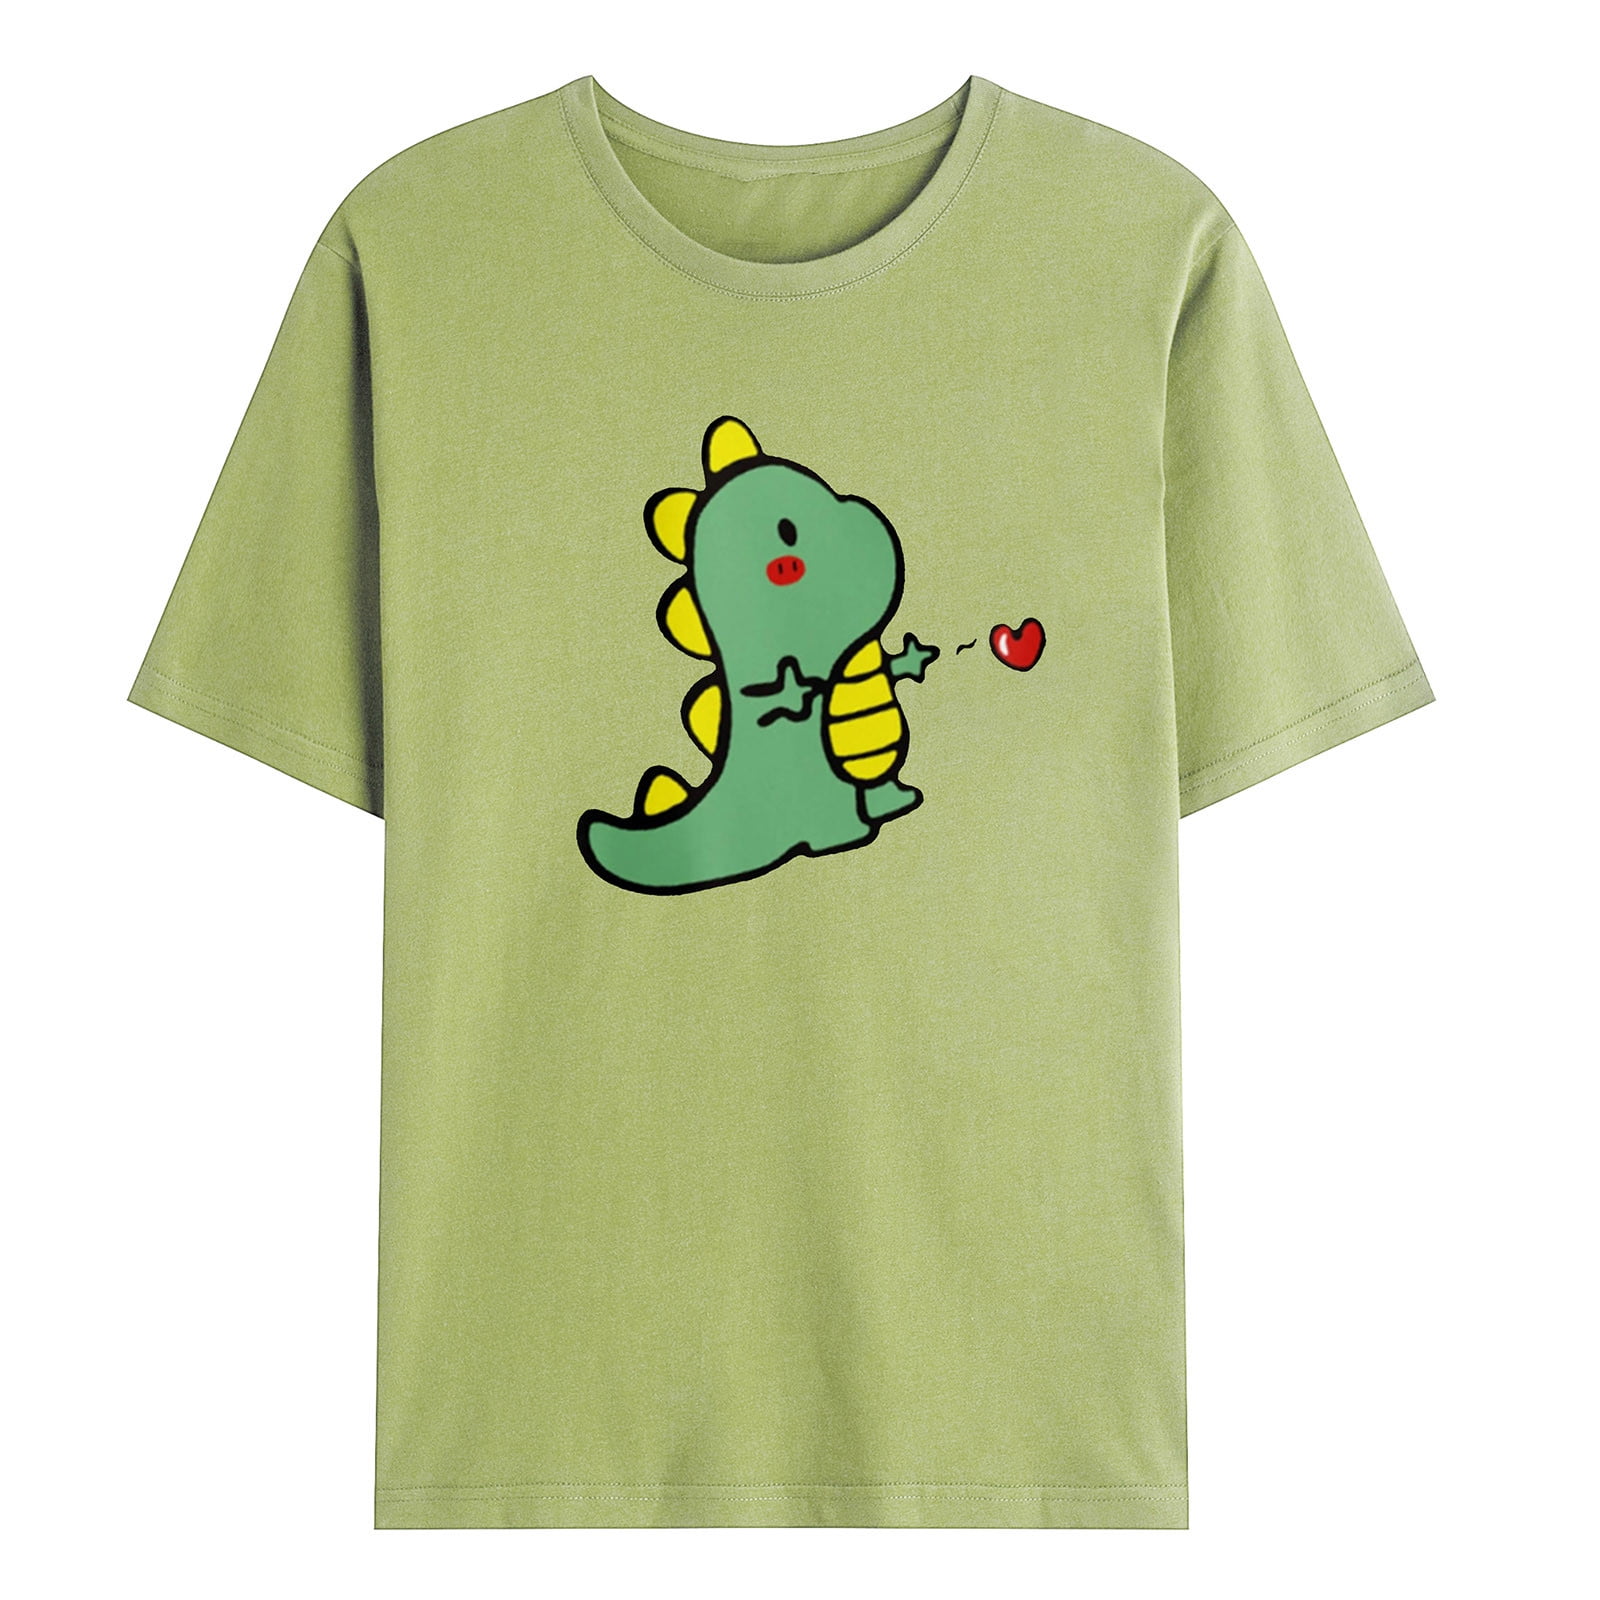 Langwyqu Giraffe Print Graphic Short Sleeve T-Shirt Plus Size Women Tops, Women's, Size: Small, Green